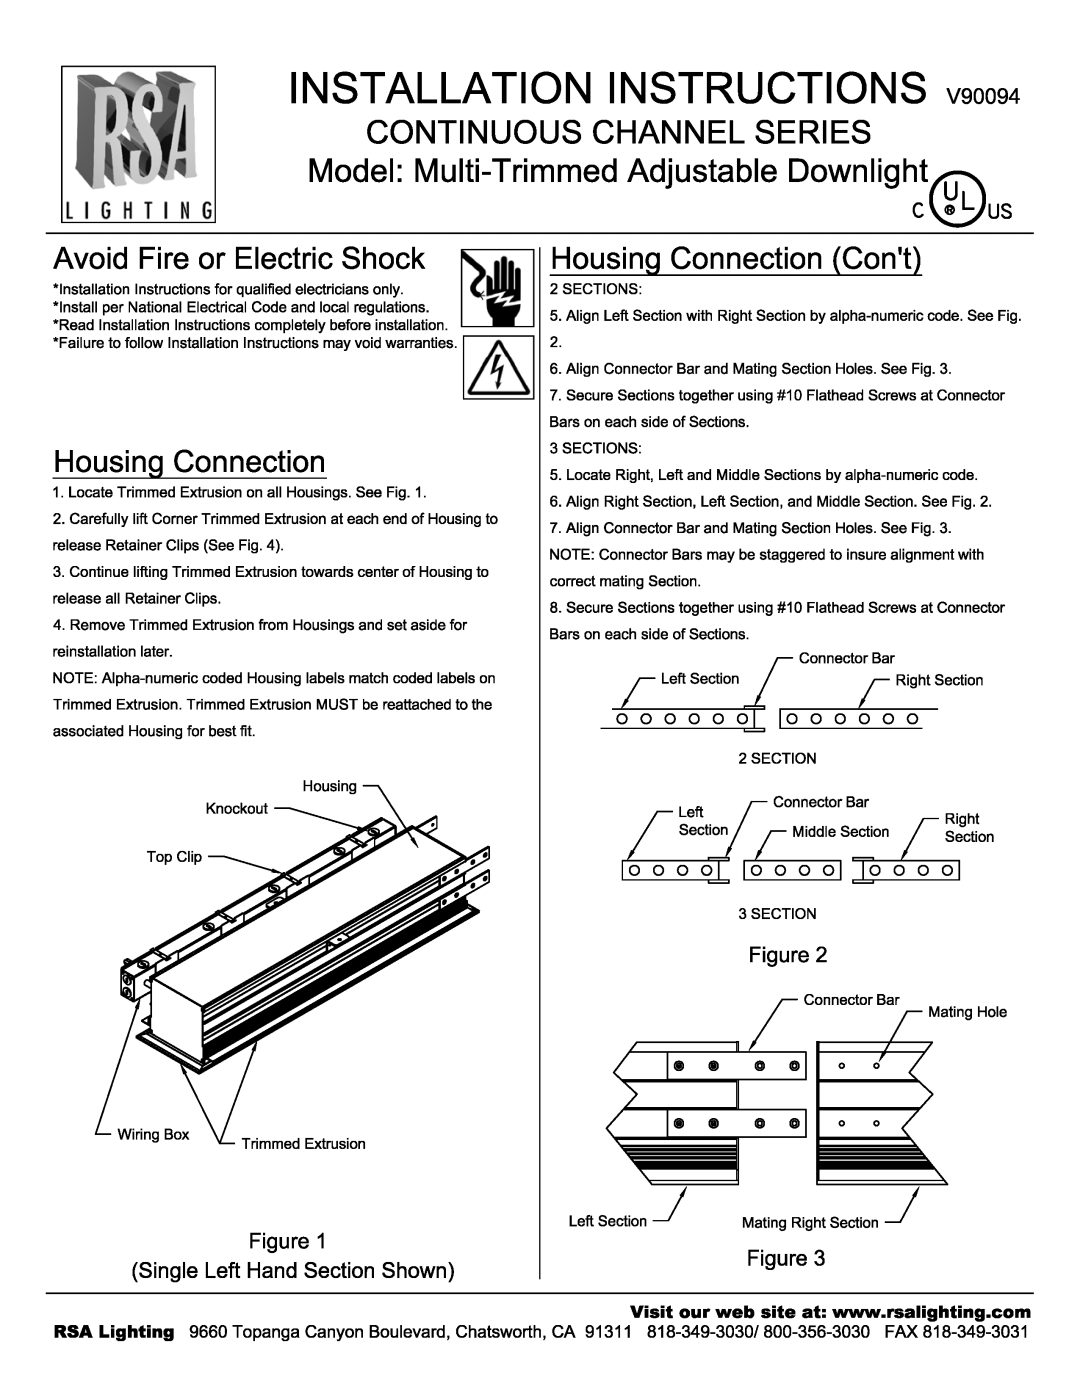 Cooper Lighting V90094A manual 